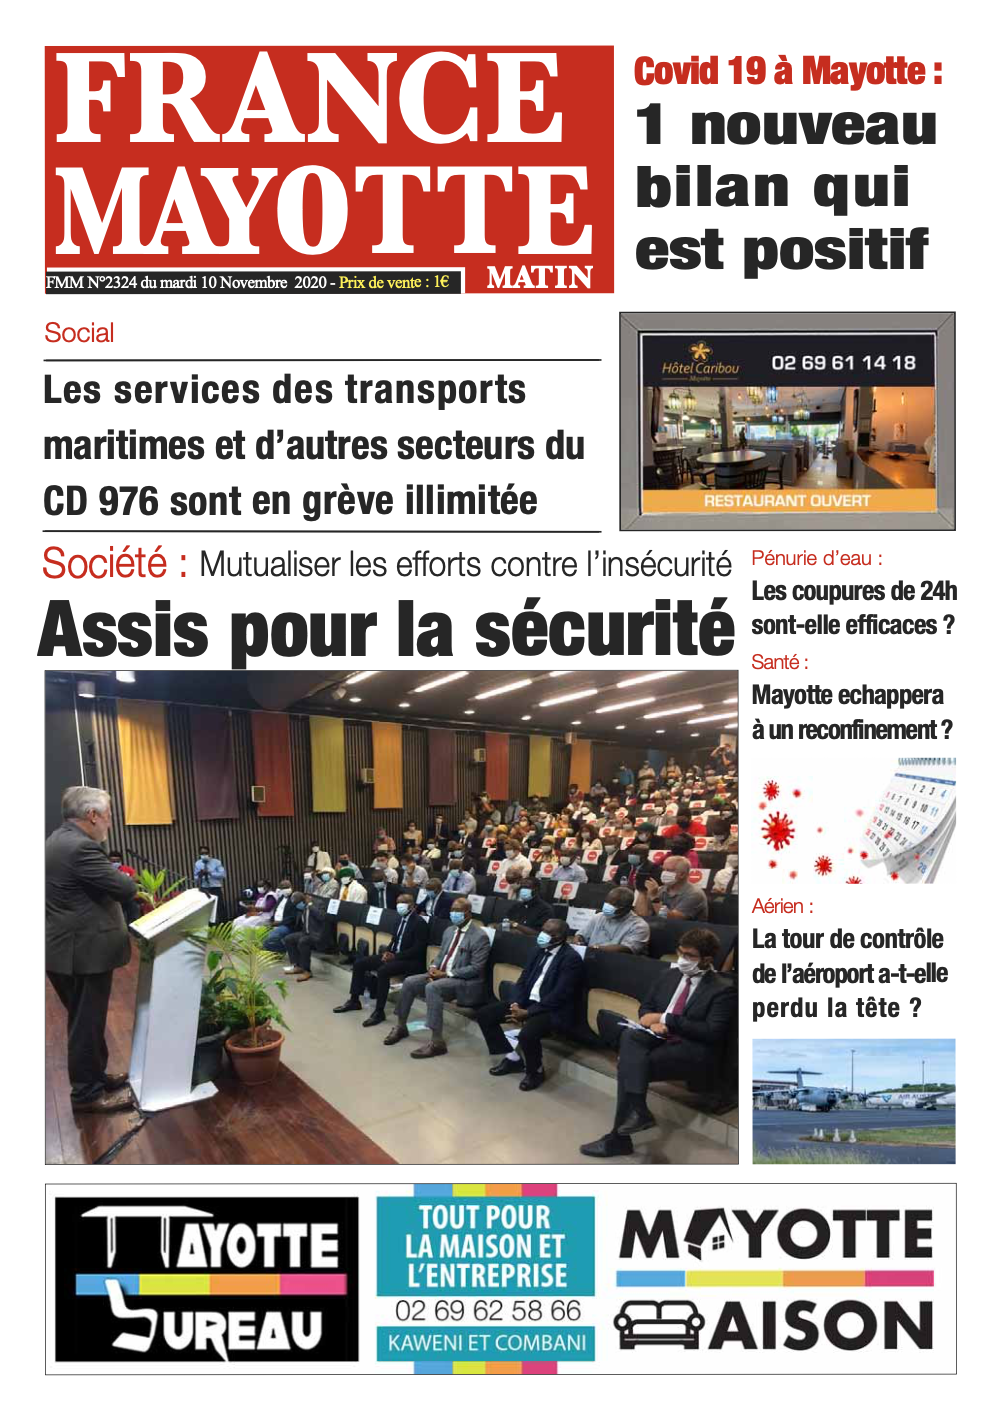 France Mayotte Mardi 10 novembre 2020